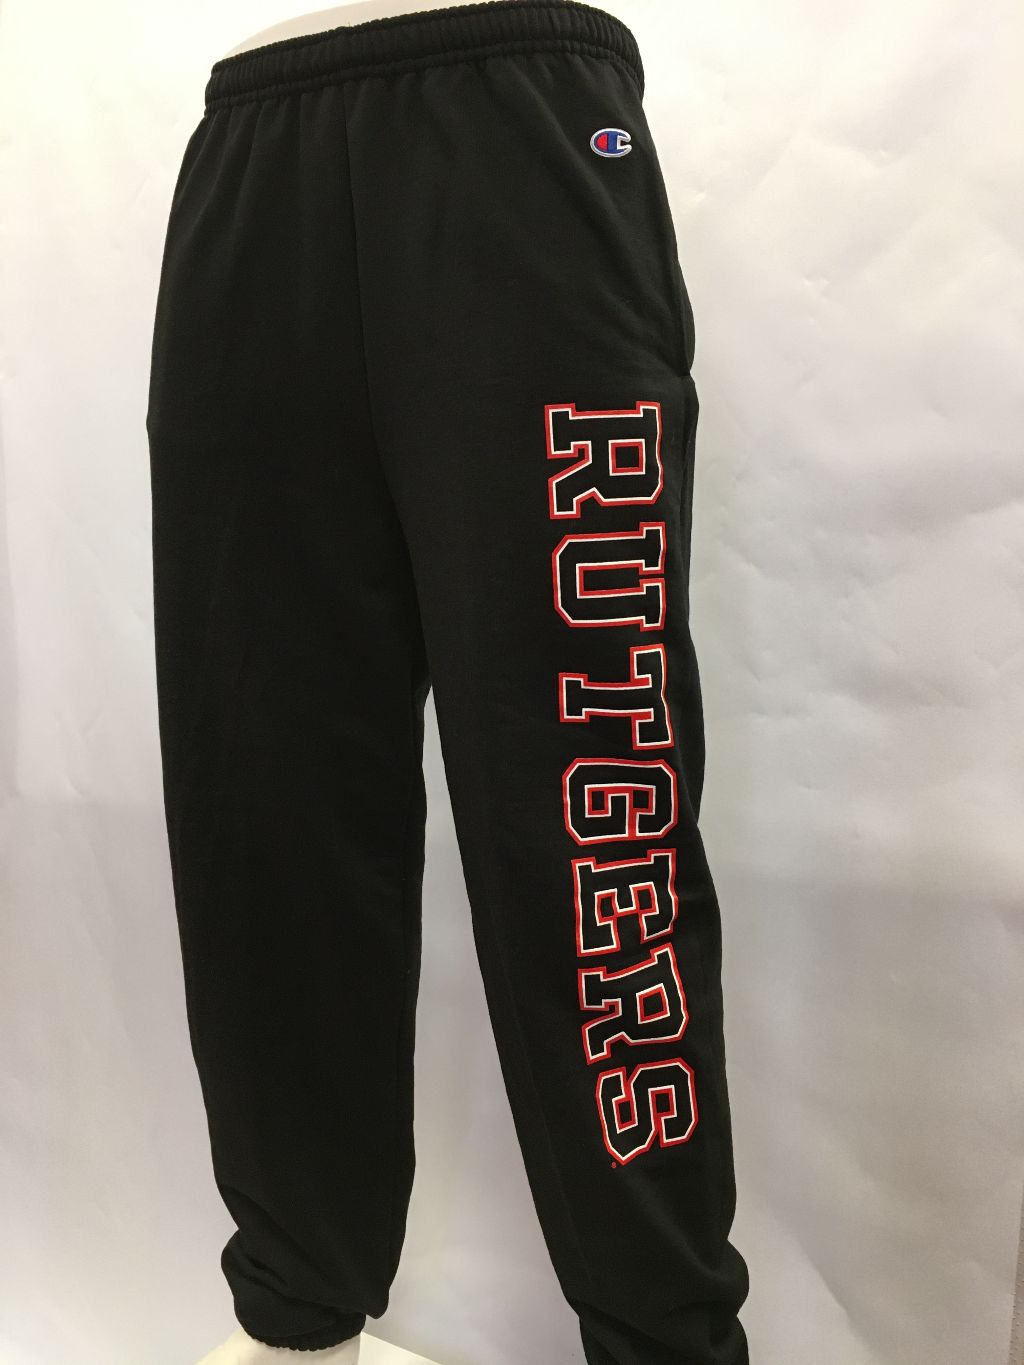 Rutgers Champion Sweatpant in Black 